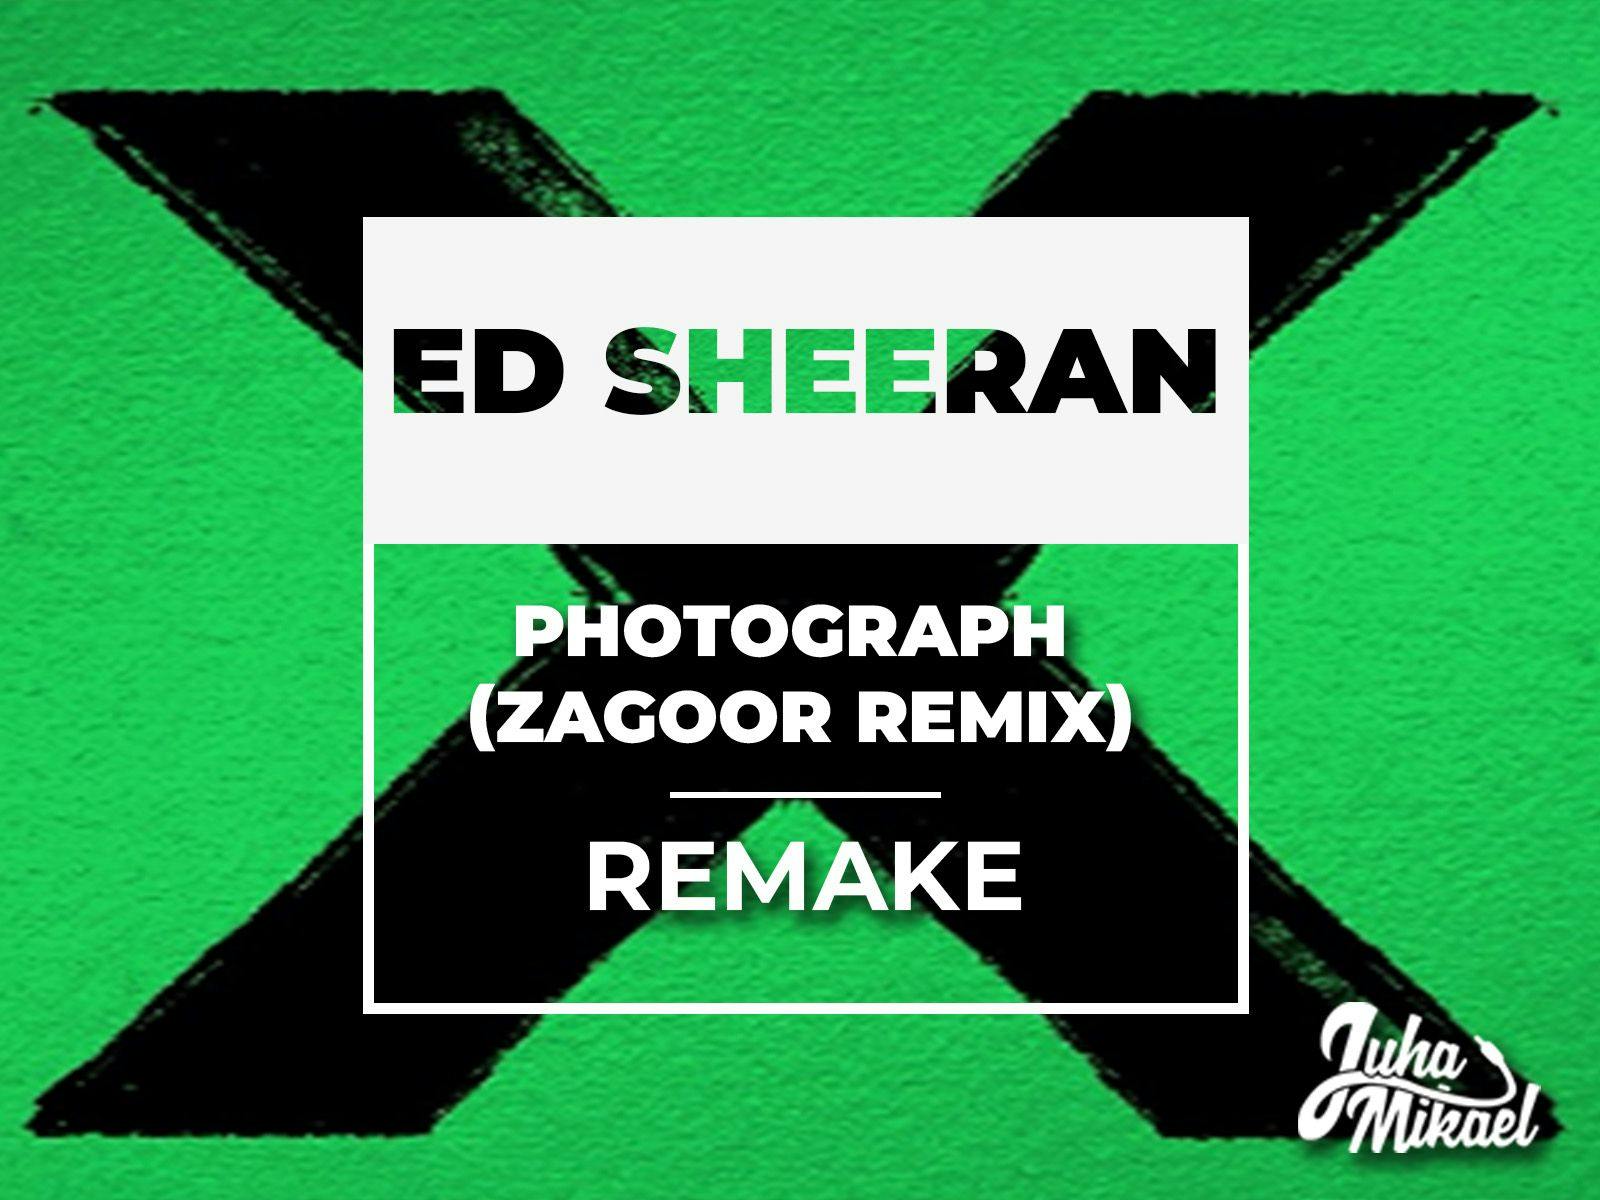 Photograph (Zagoor Remix)